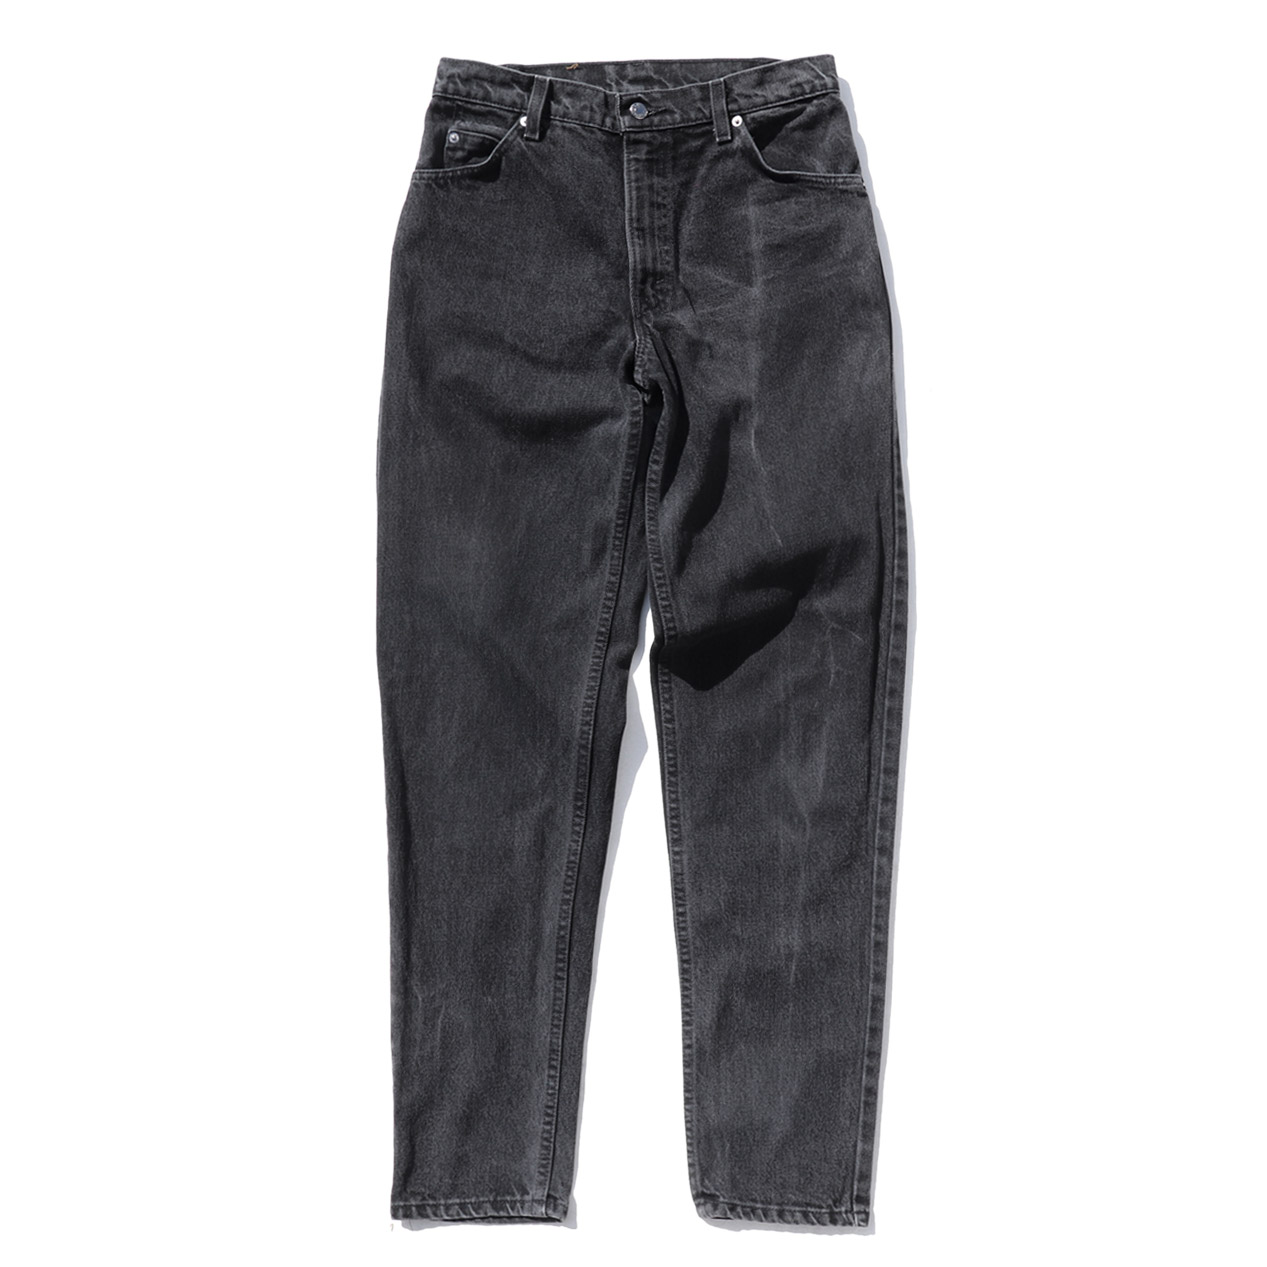 POST JUNK / 80's LEVI'S 550 Black Denim Pants Made In U.S.A. [W30]